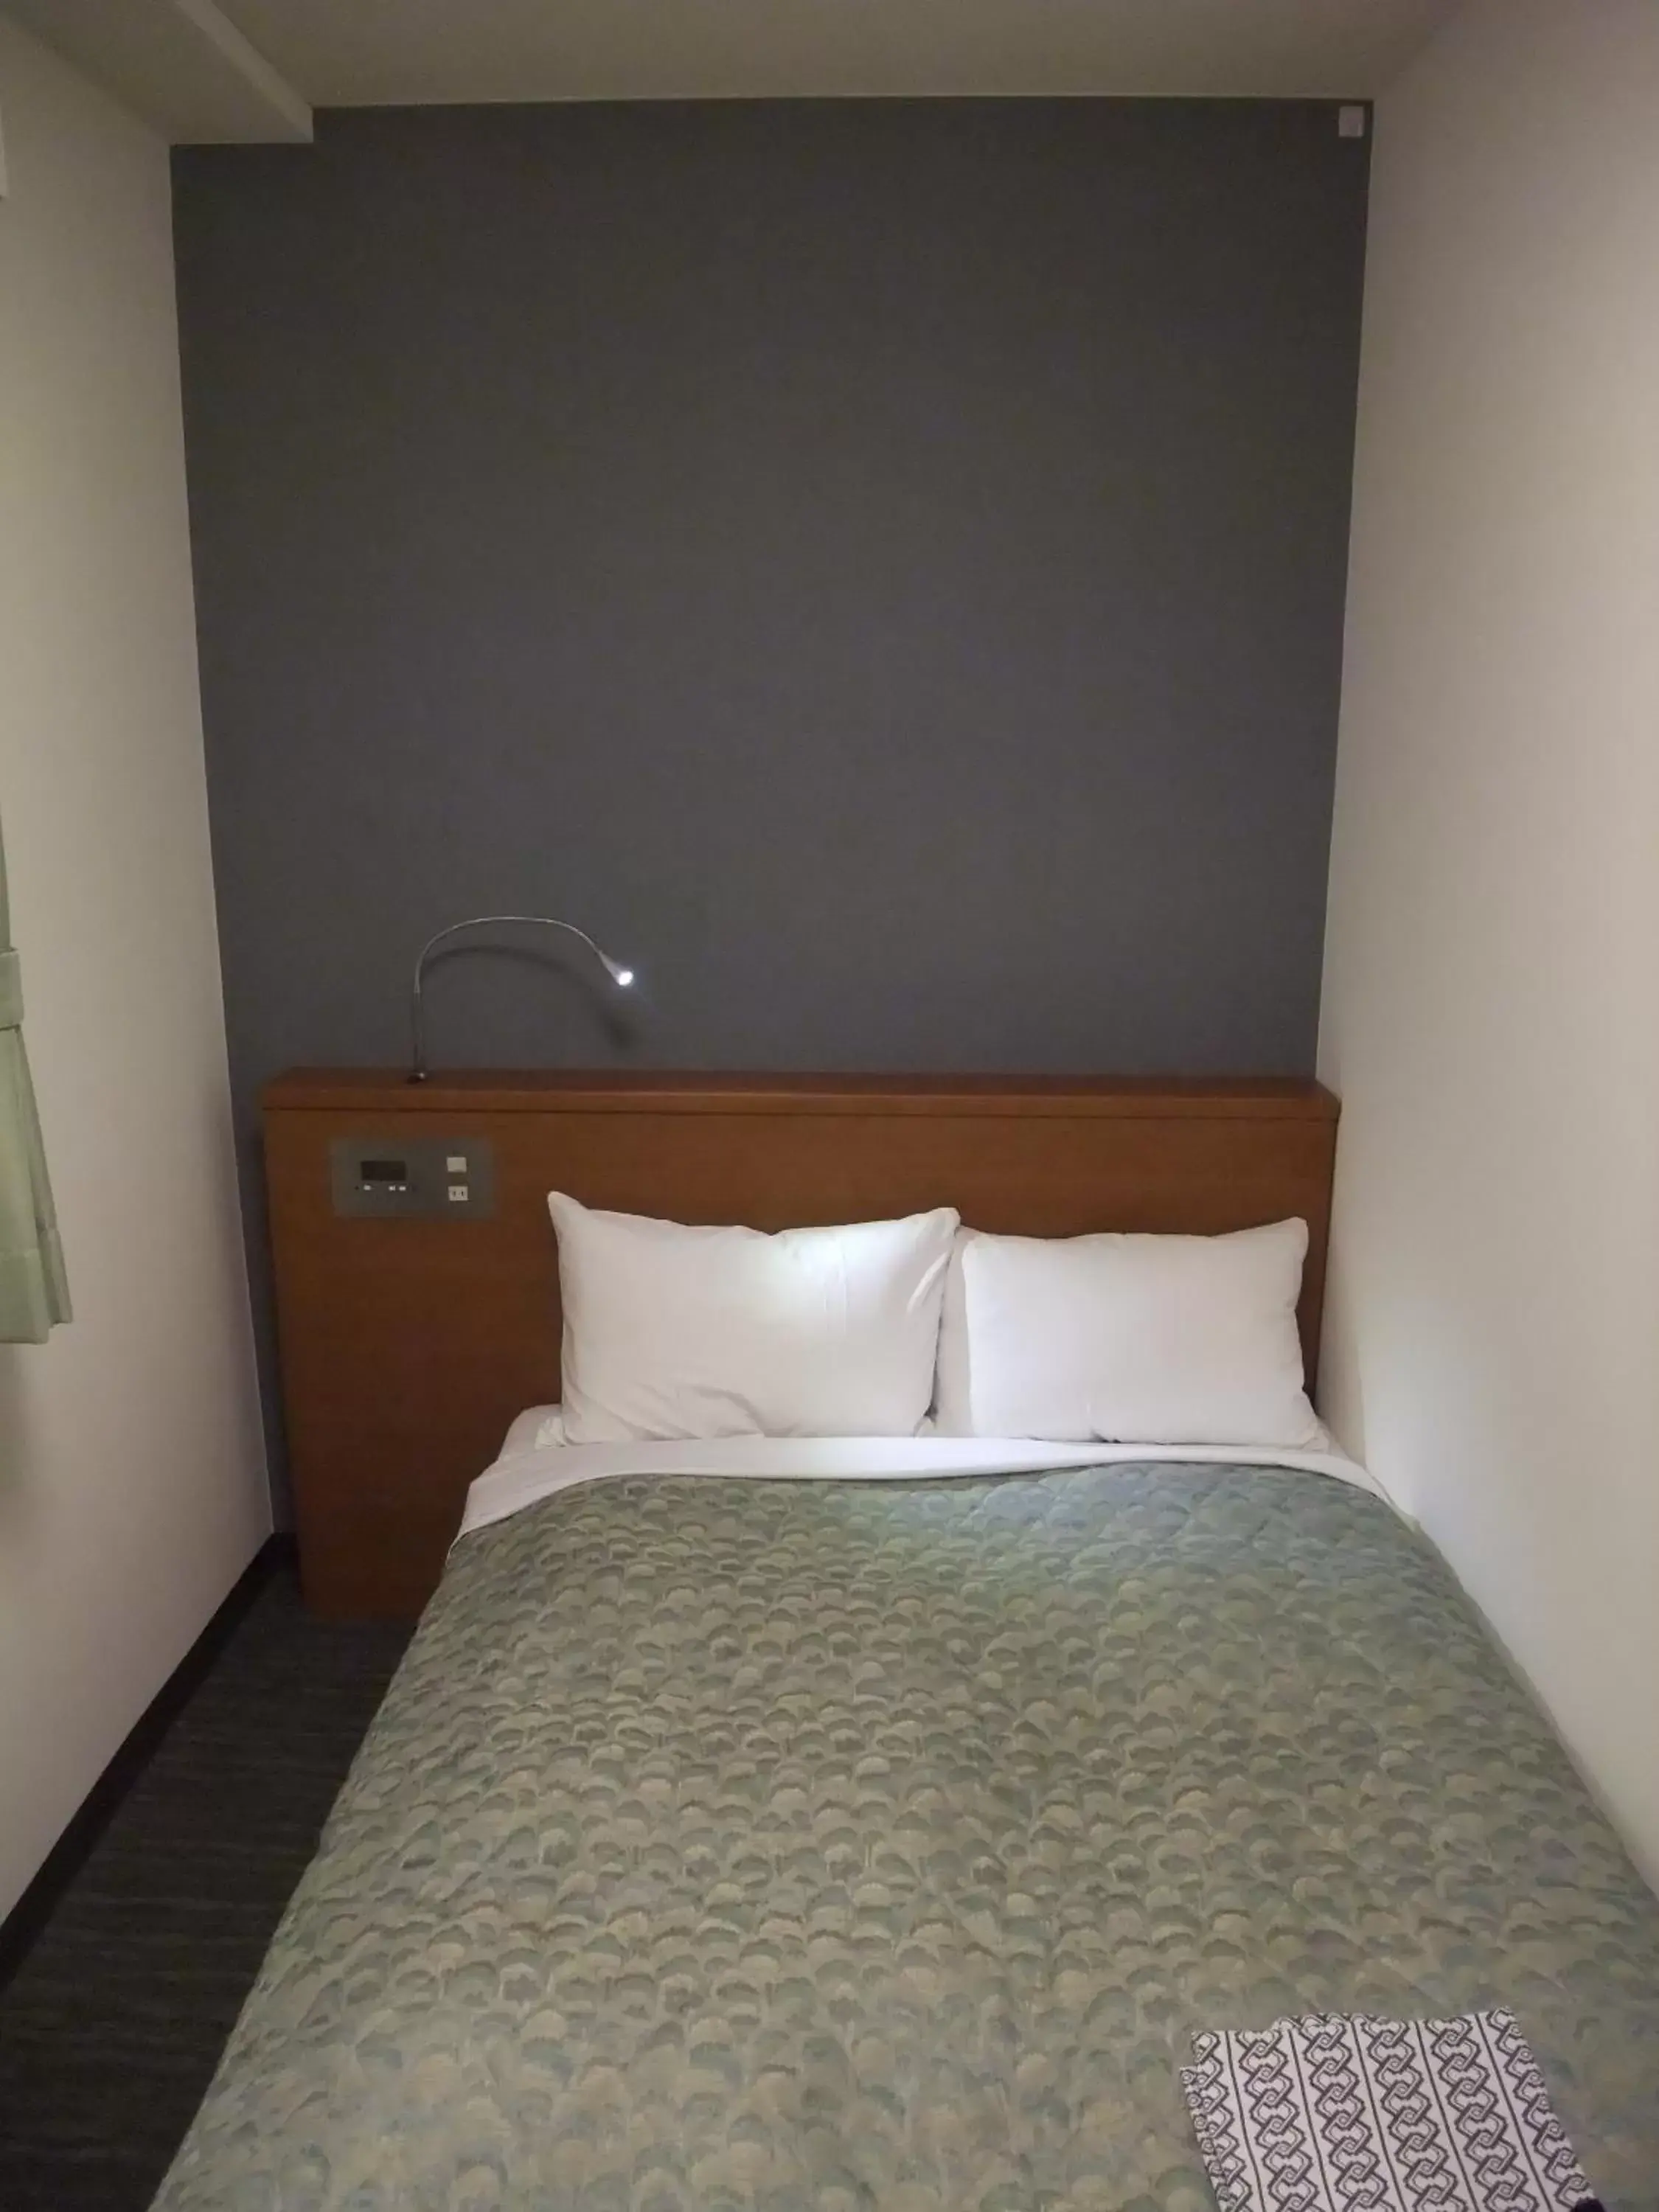 Bedroom, Room Photo in Hotel Tateshina